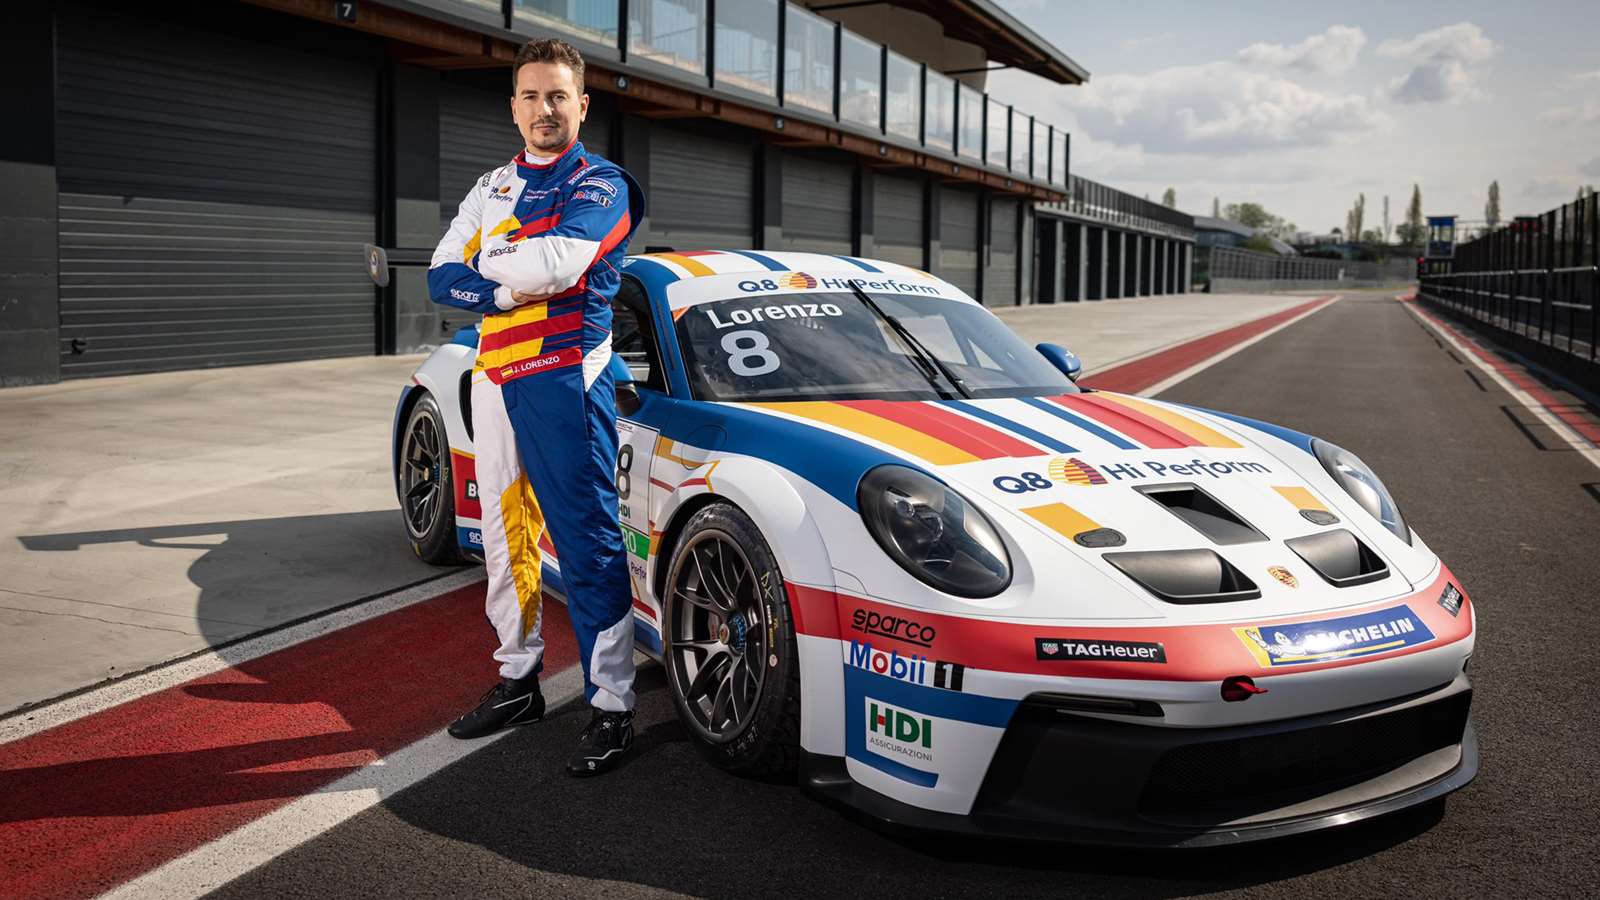 MotoGP legend Jorge Lorenzo to race Porsche 911 GT3 Cup car | GRR